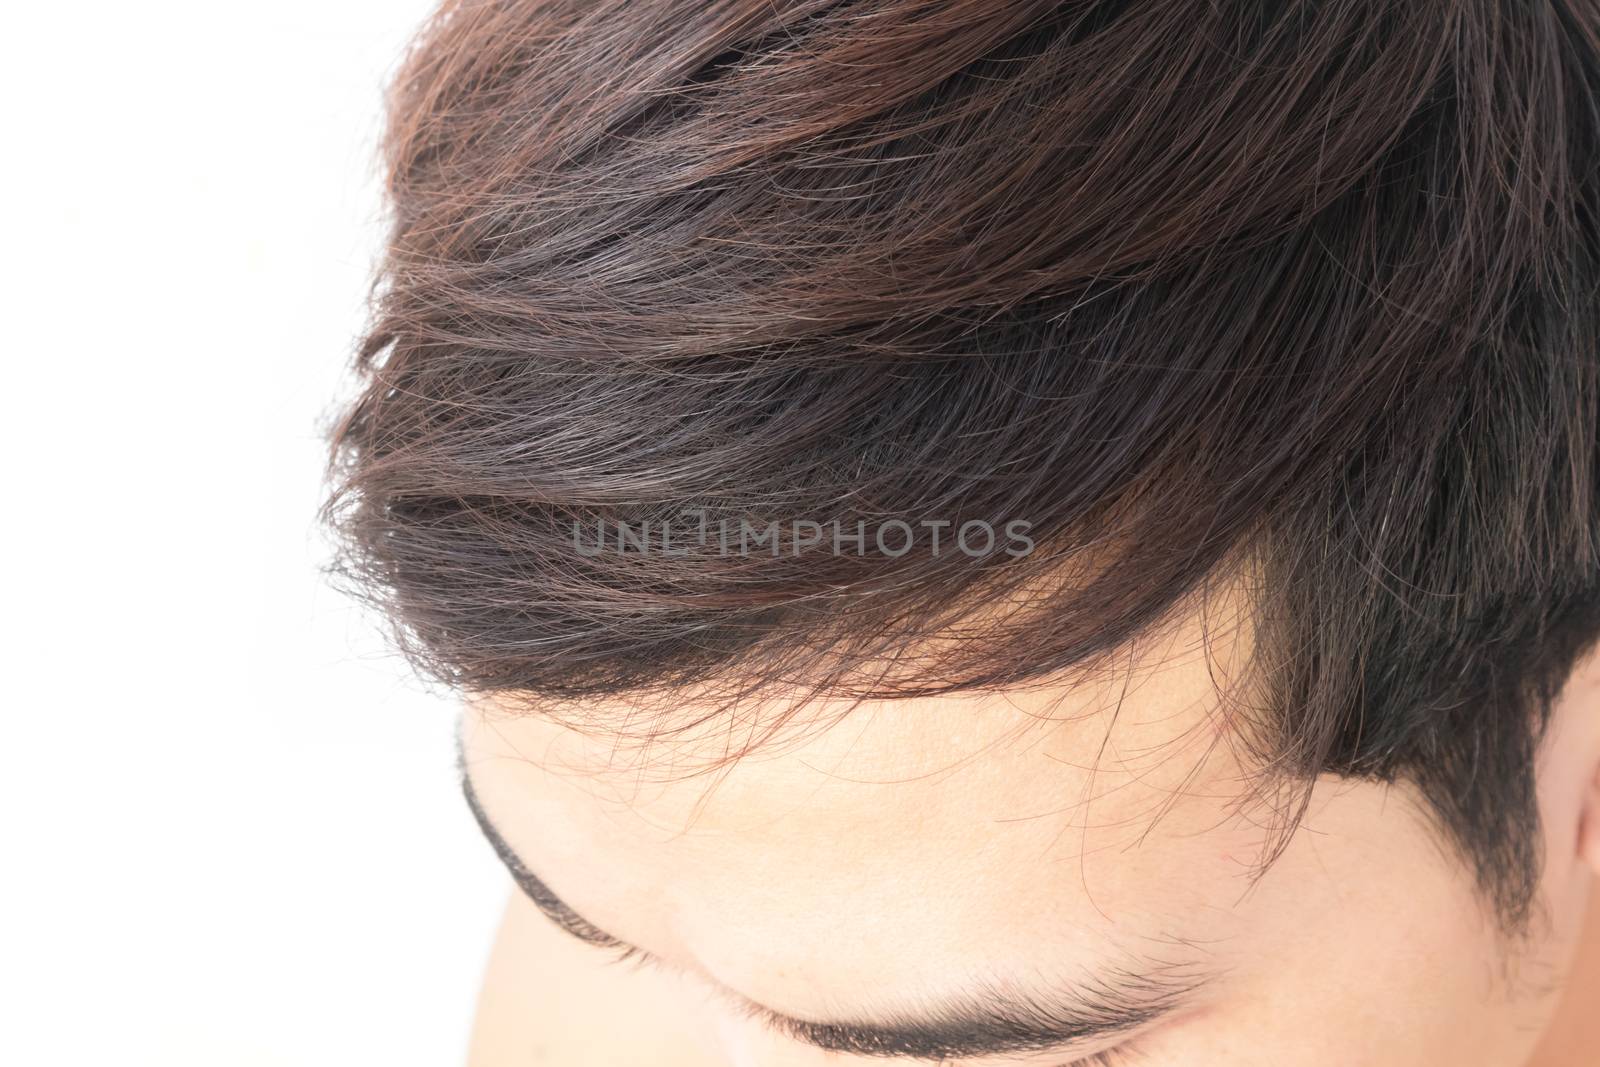 Young man worry hair loss problem for health care shampoo by pt.pongsak@gmail.com